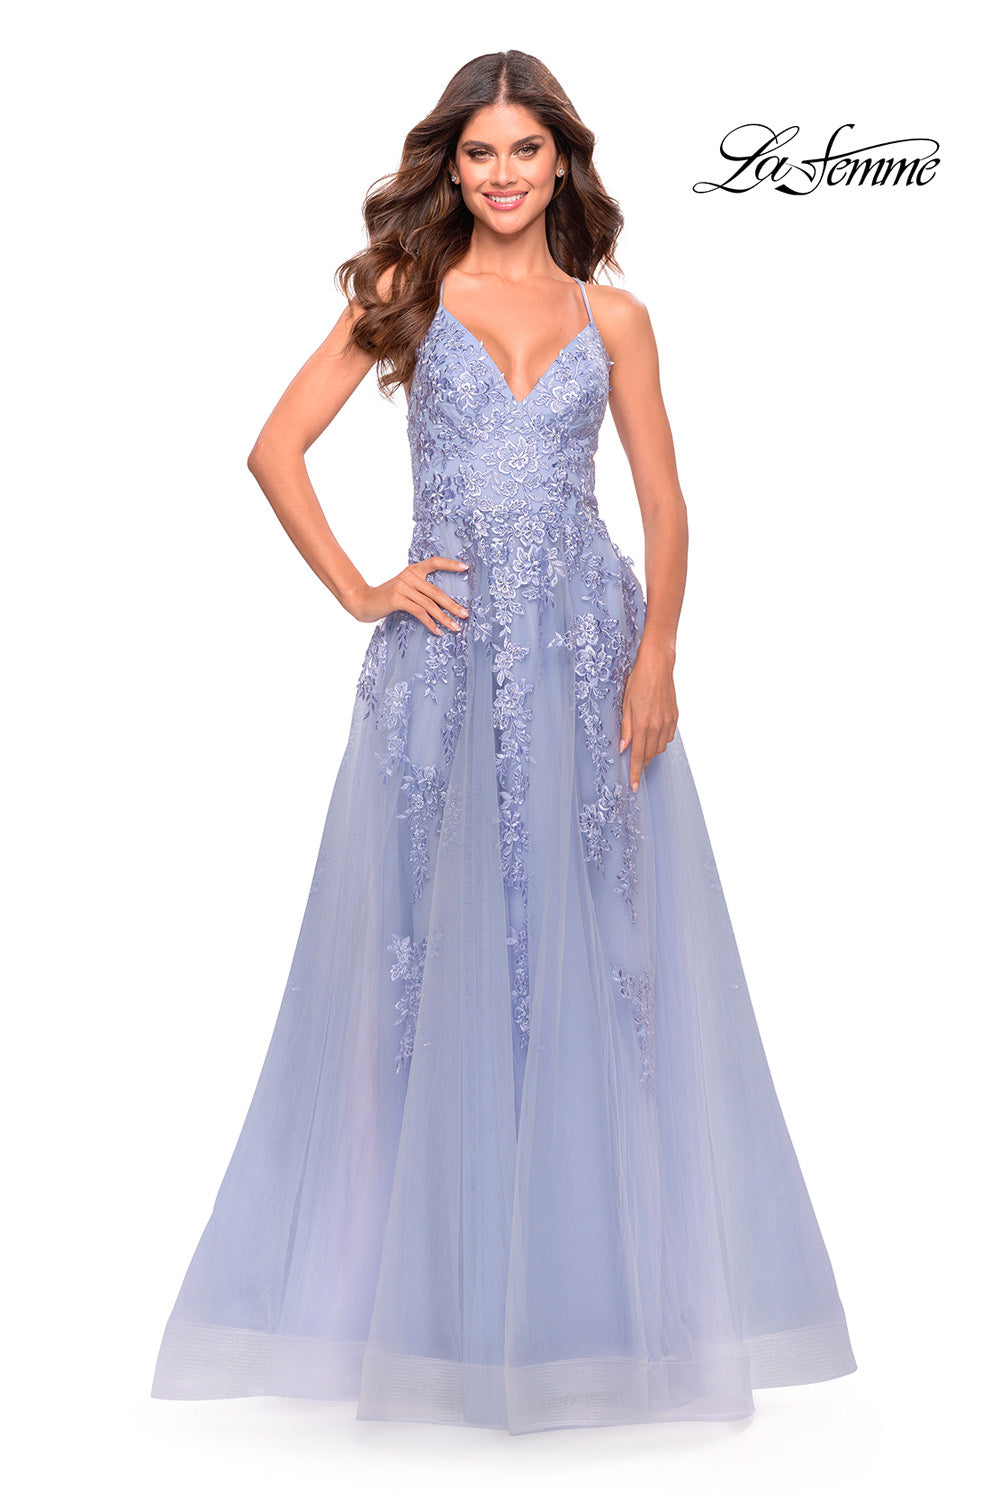 La Femme 31503 prom dress images.  La Femme 31503 is available in these colors: Aqua, Light Periwinkle, Sage.